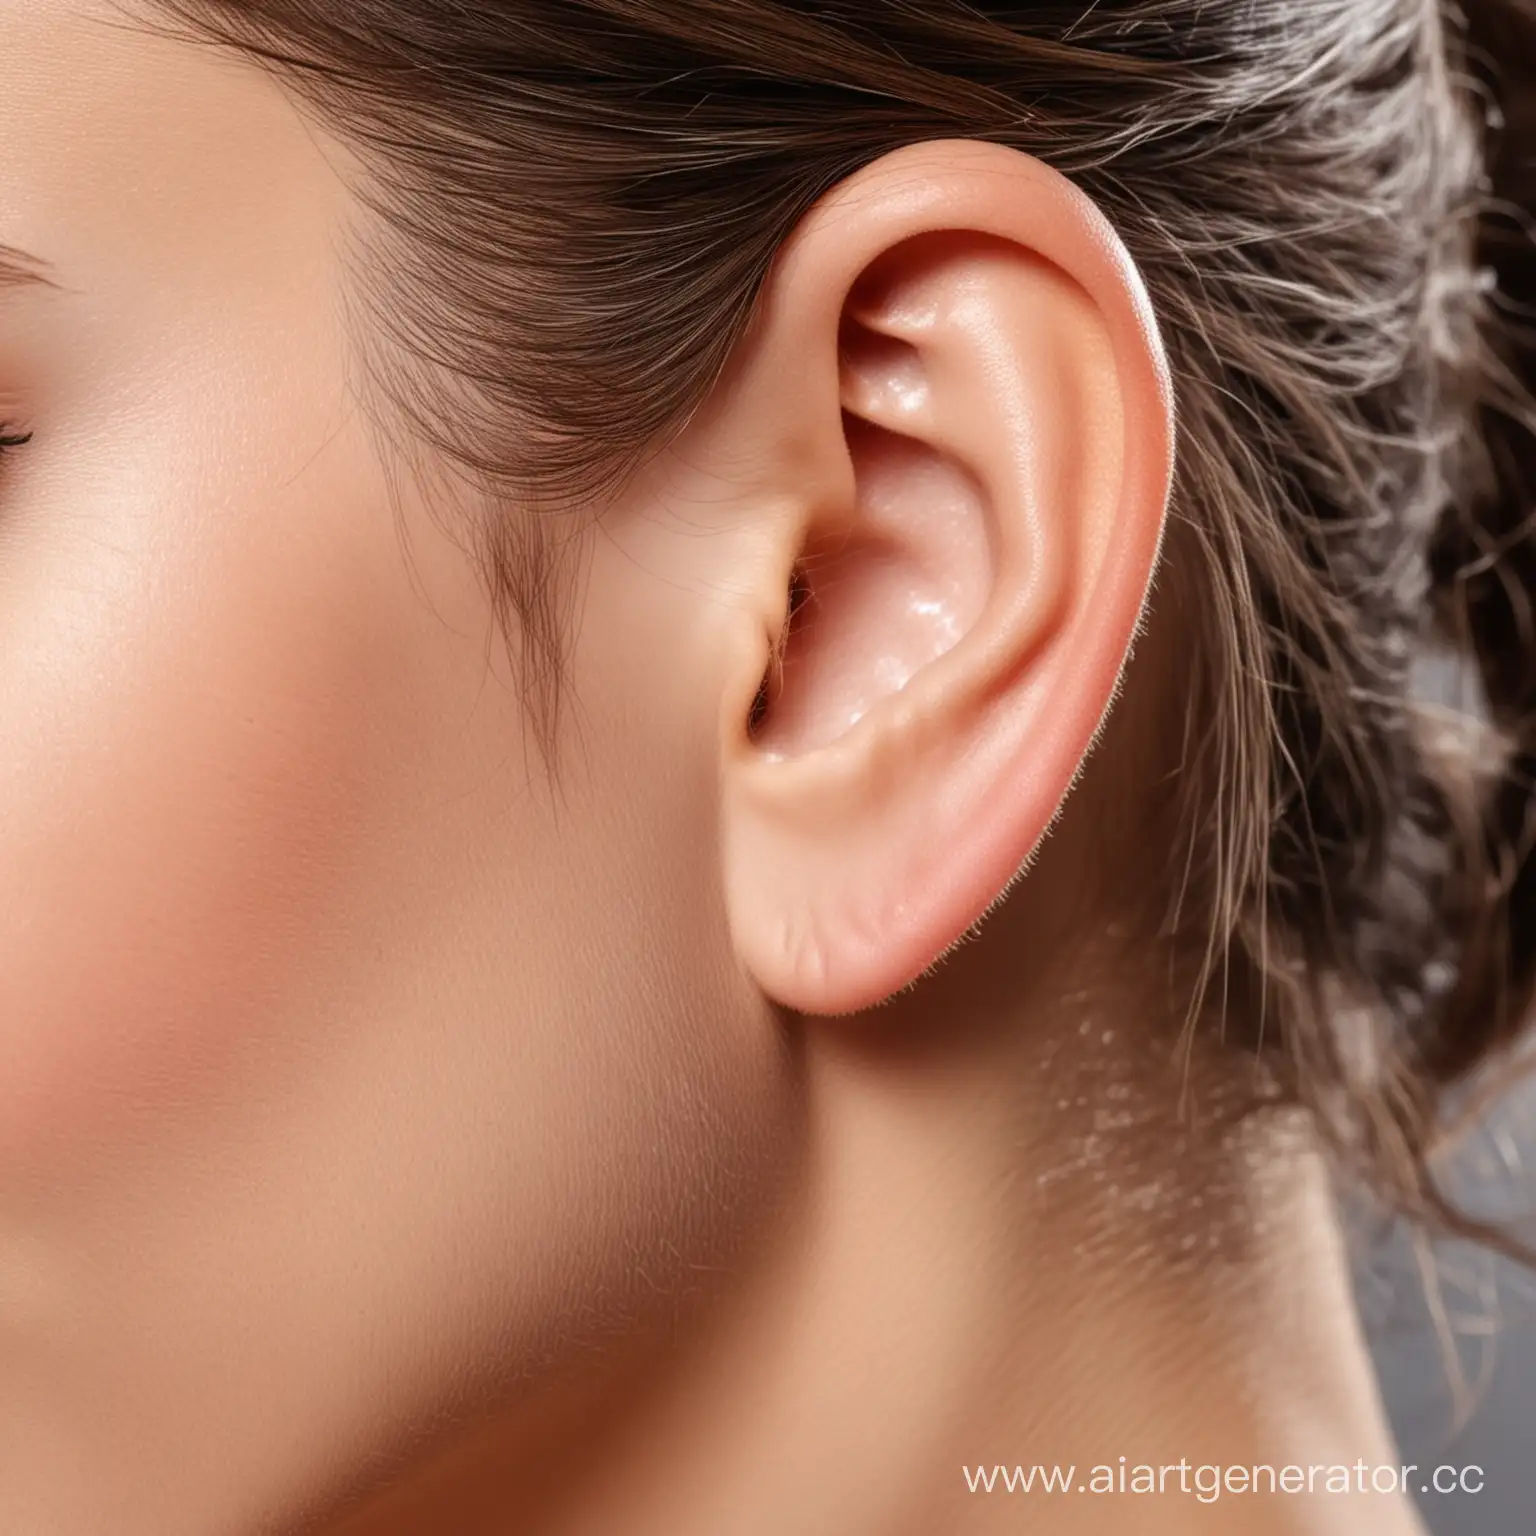 photoshoot of woman ear